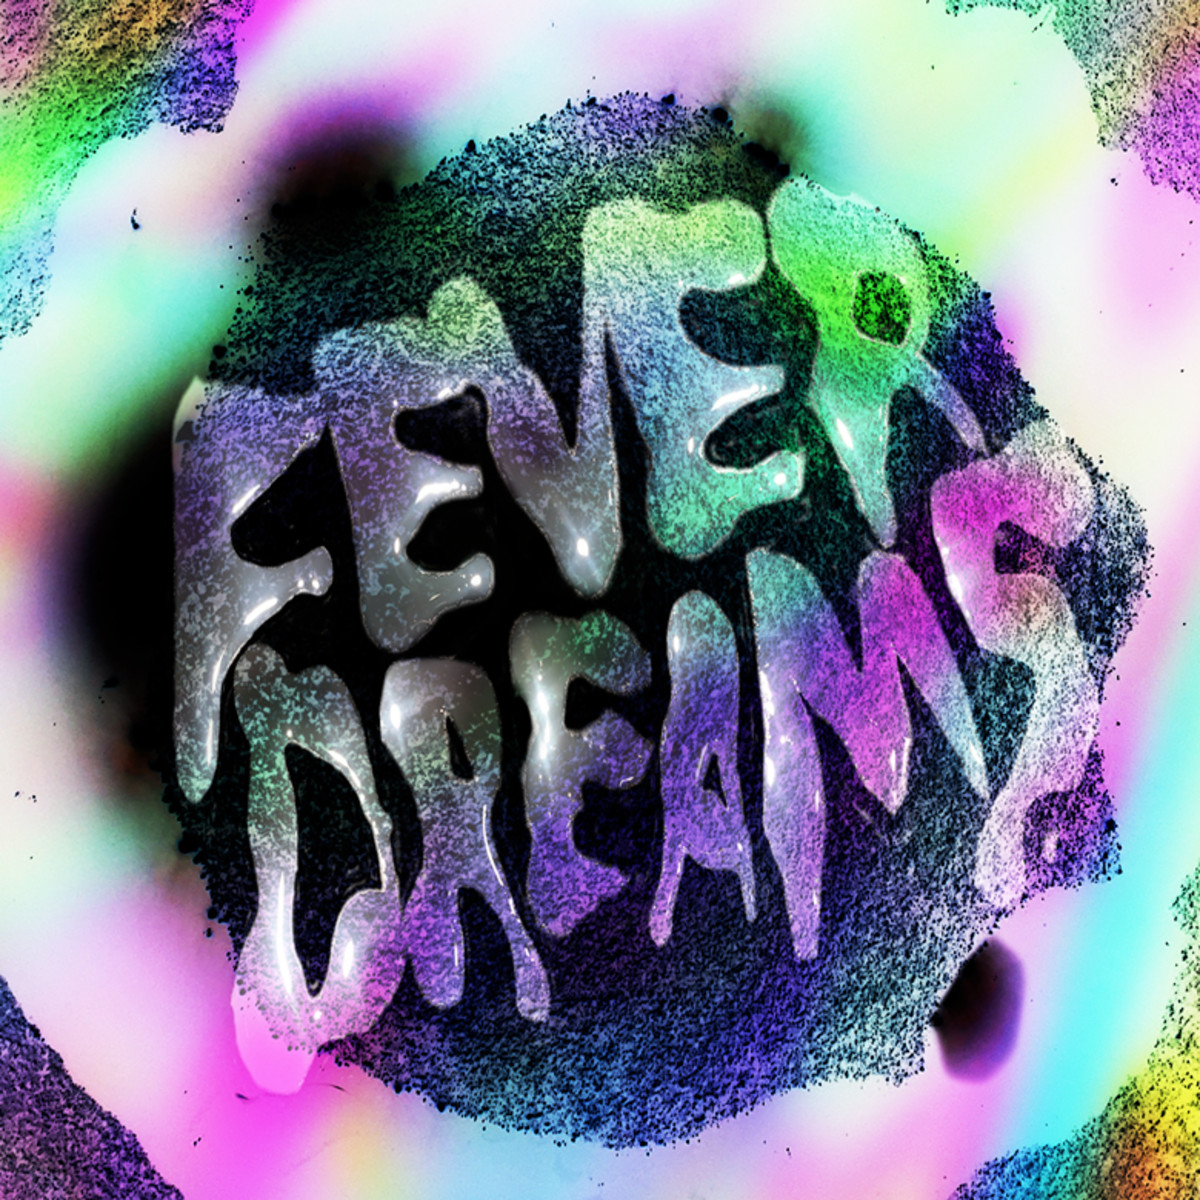 fever dreams cover web - Adult Swim - Fever Dreams